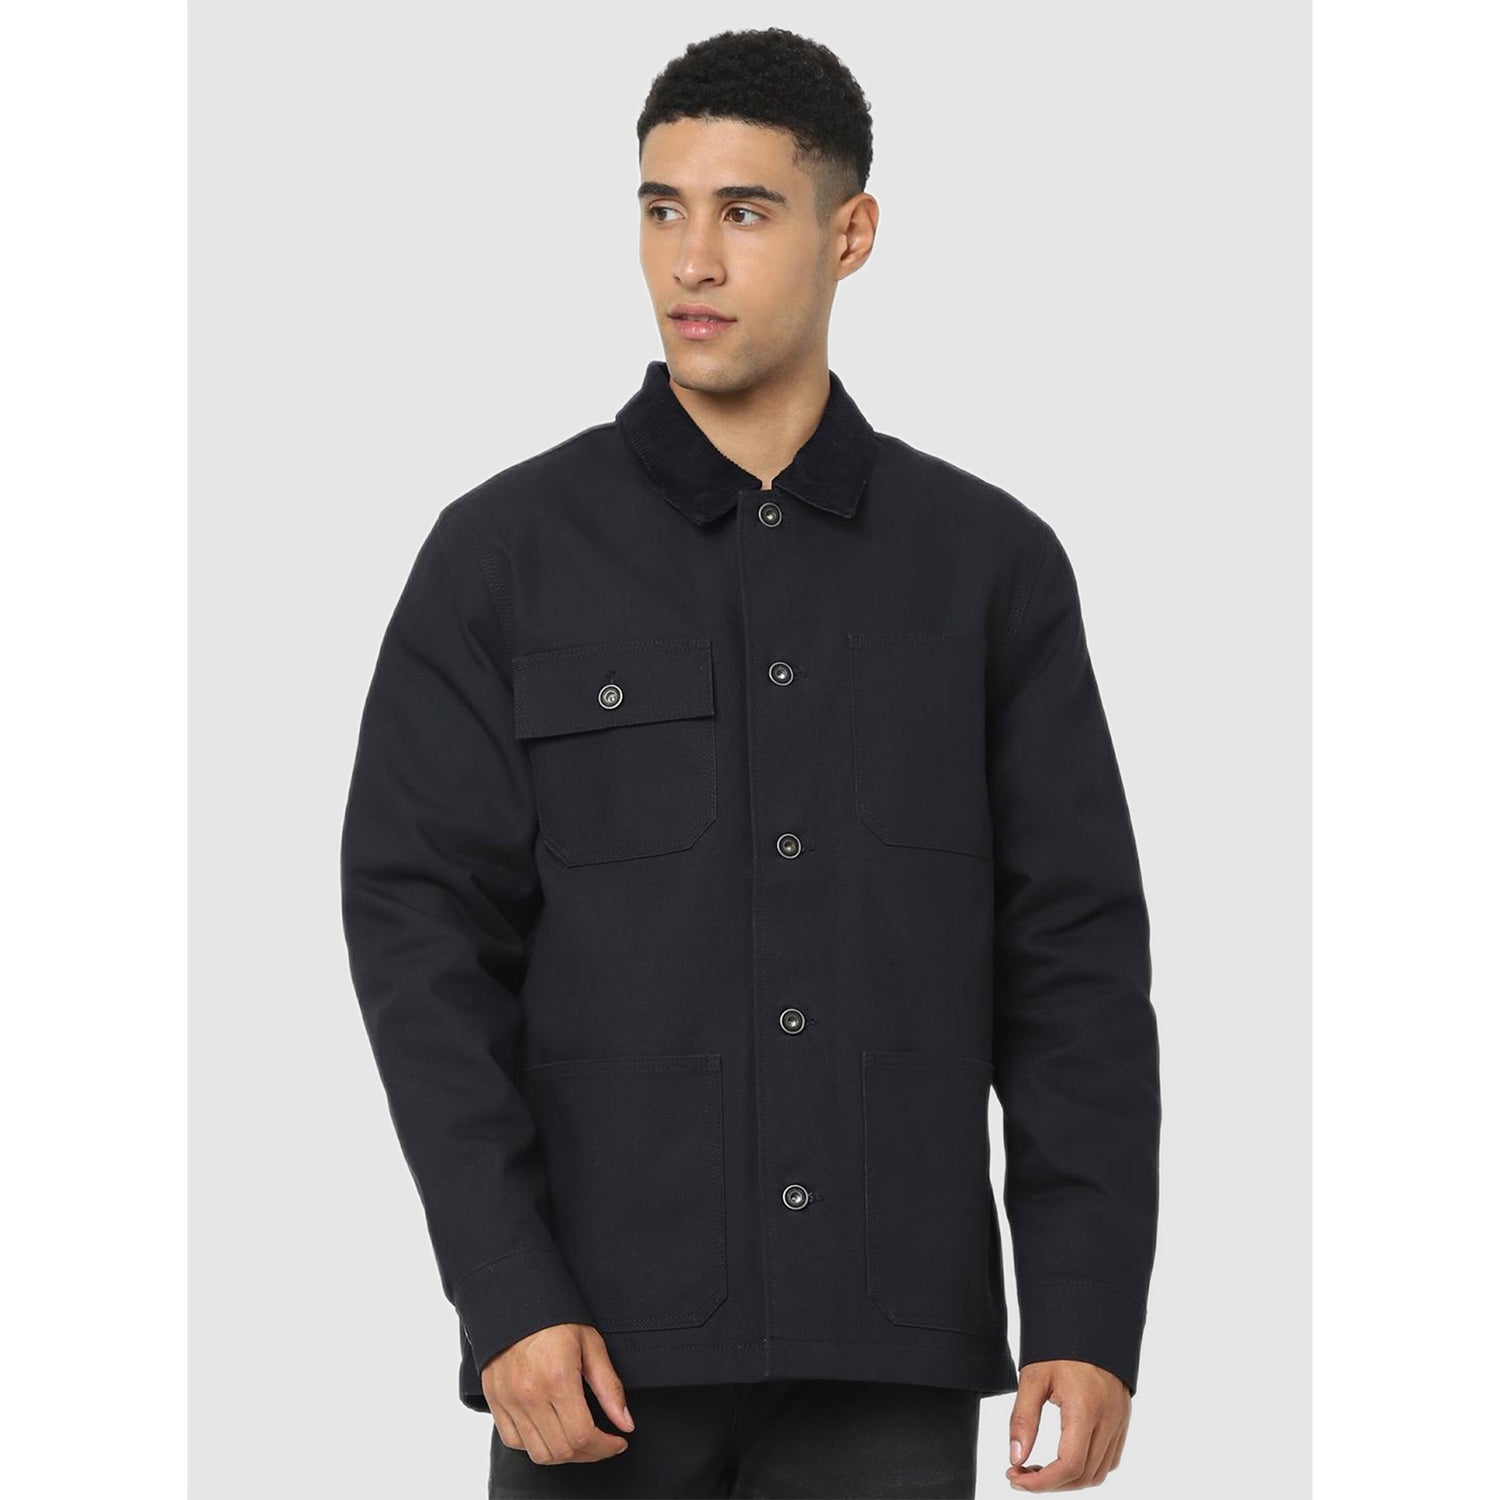 Black Longline Tailored Denim Jacket (CUCANVAS)